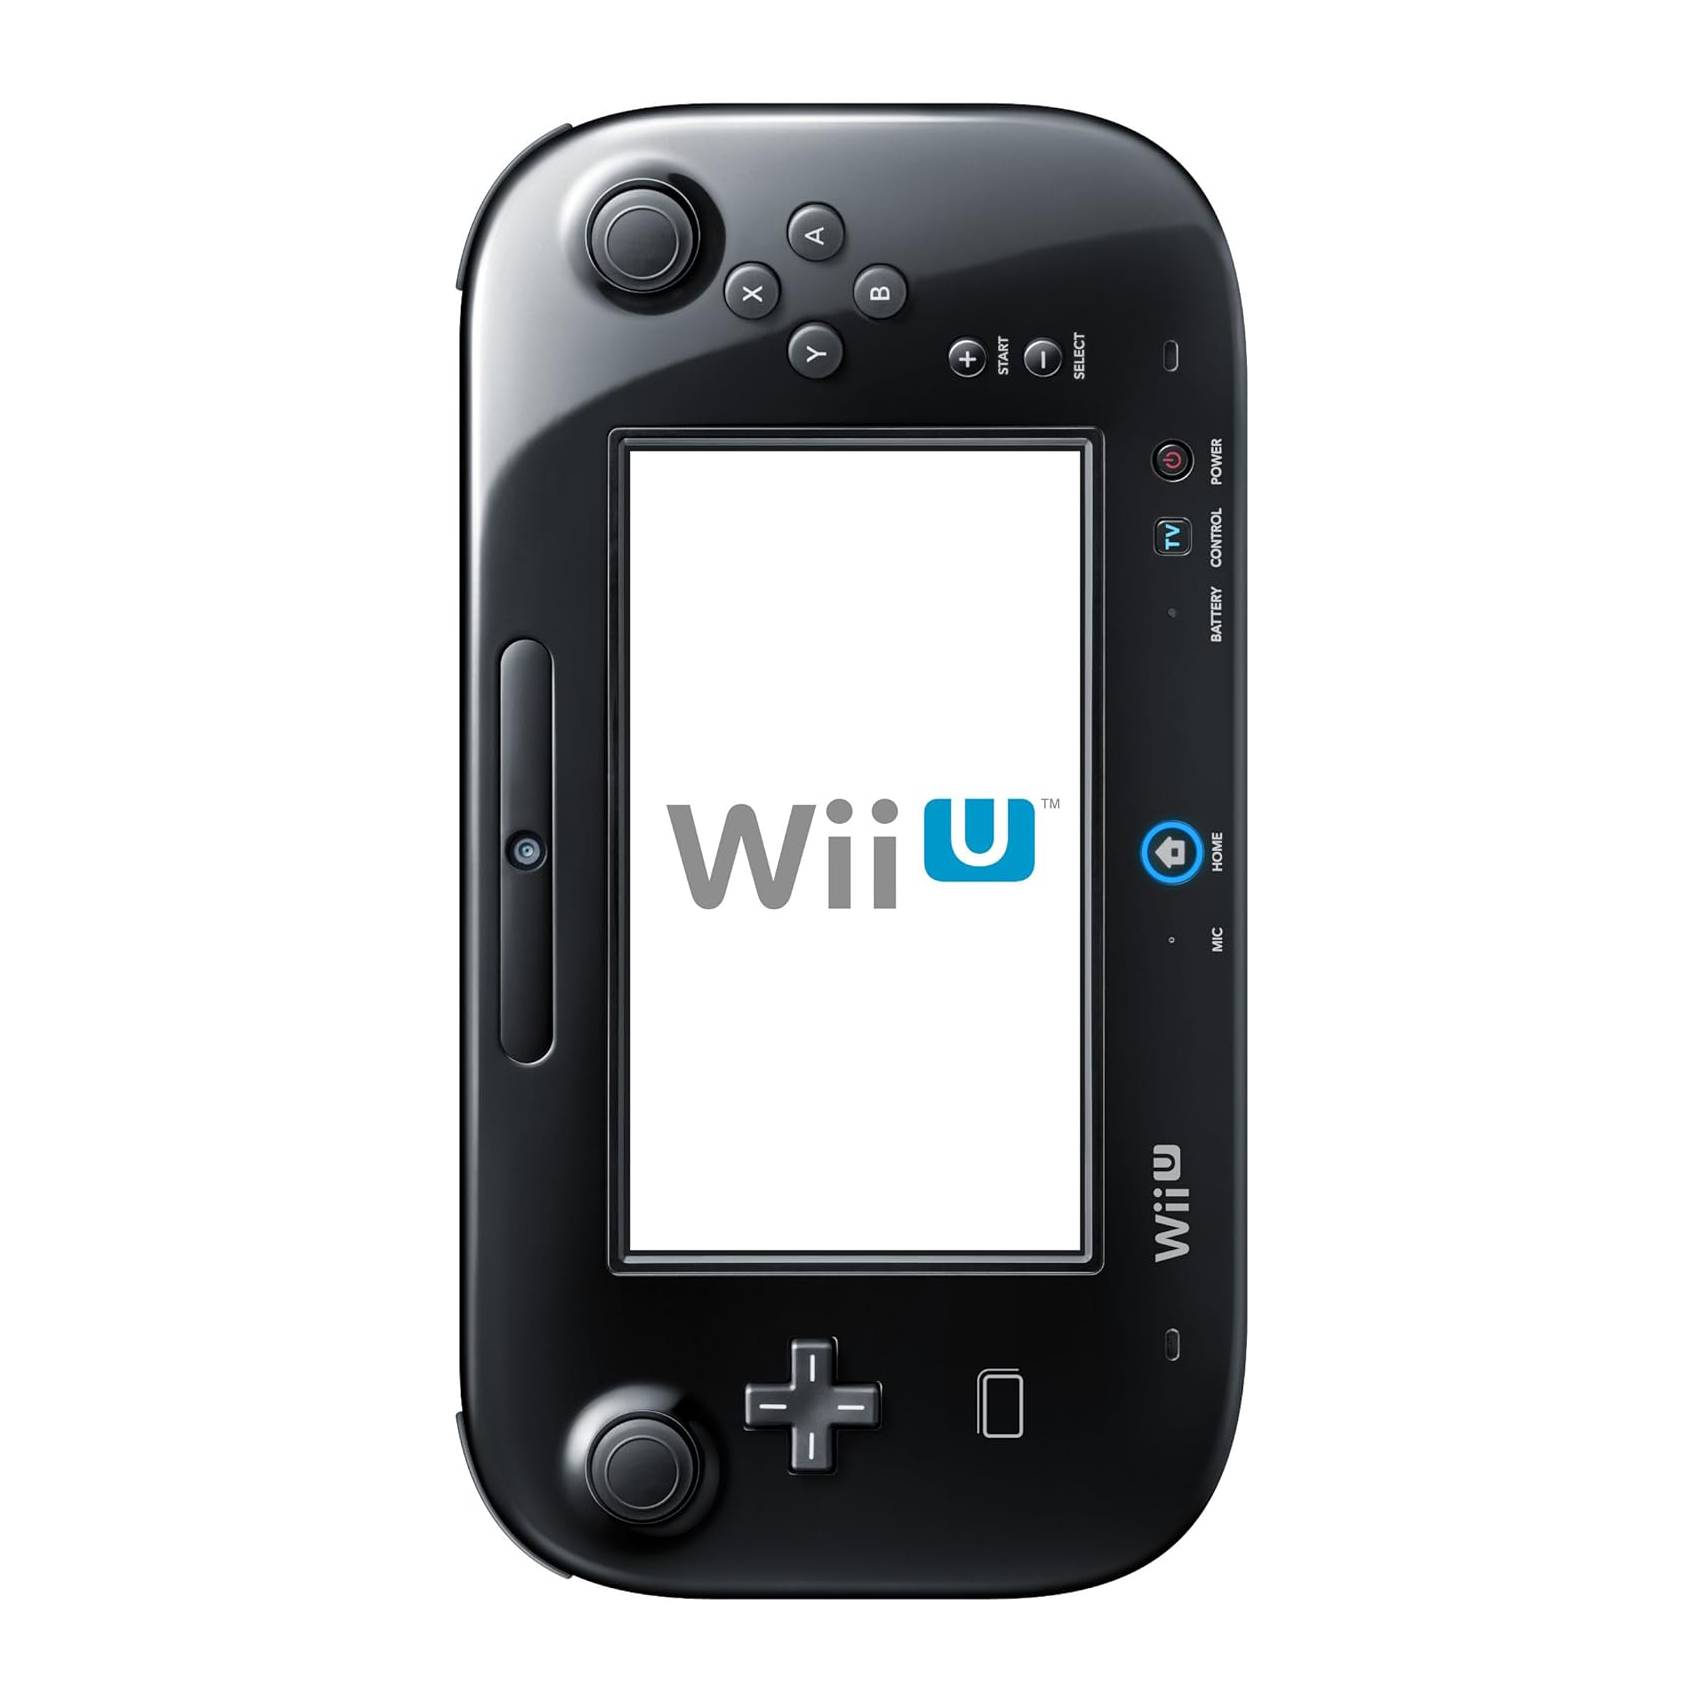 Nintendo Wii U 32GB Black front 3 (1)